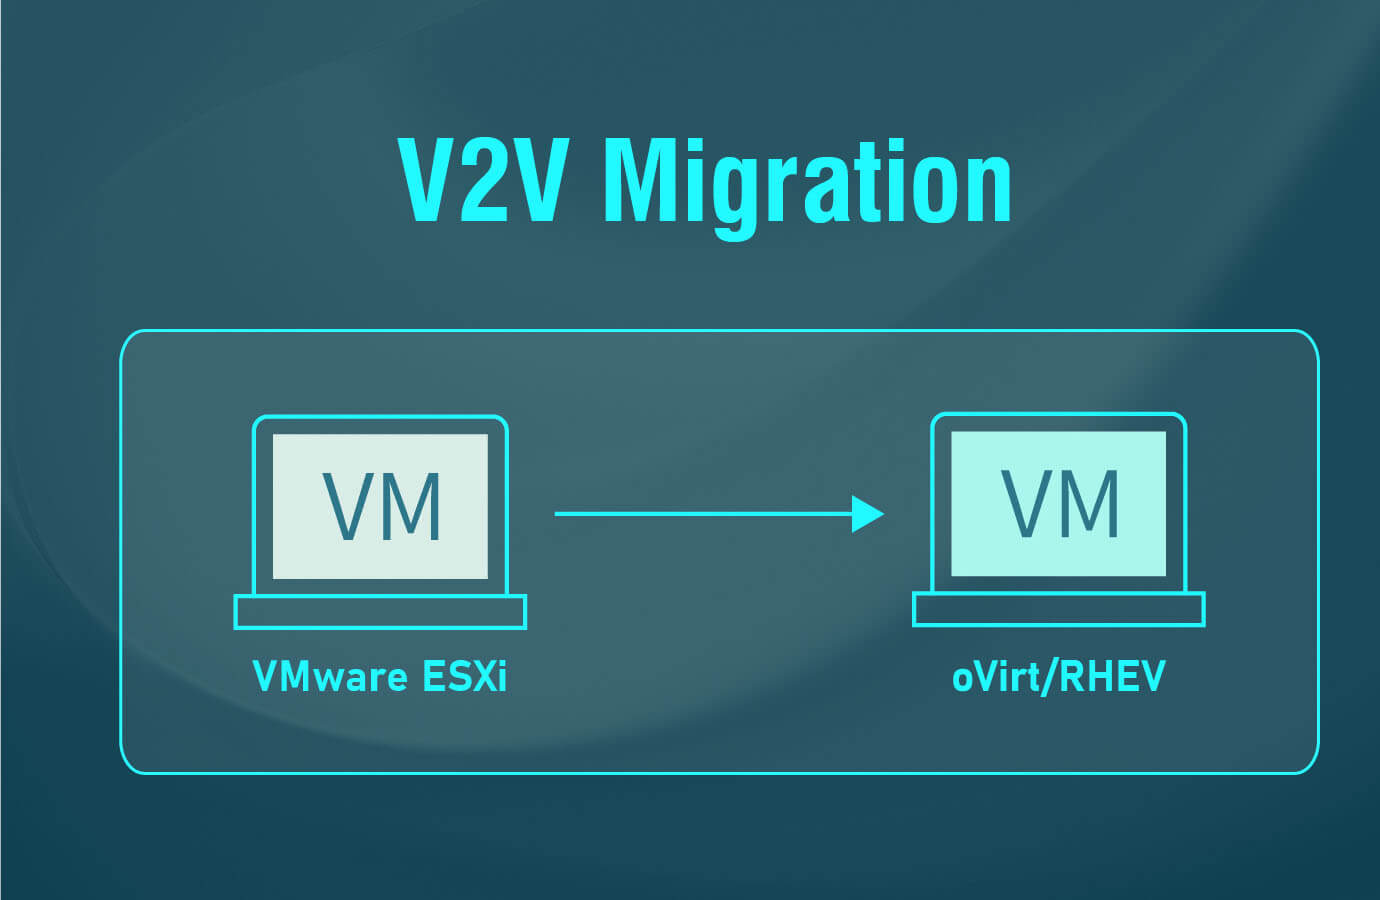 How to Migrate VMware ESXi to oVirt/RHV?